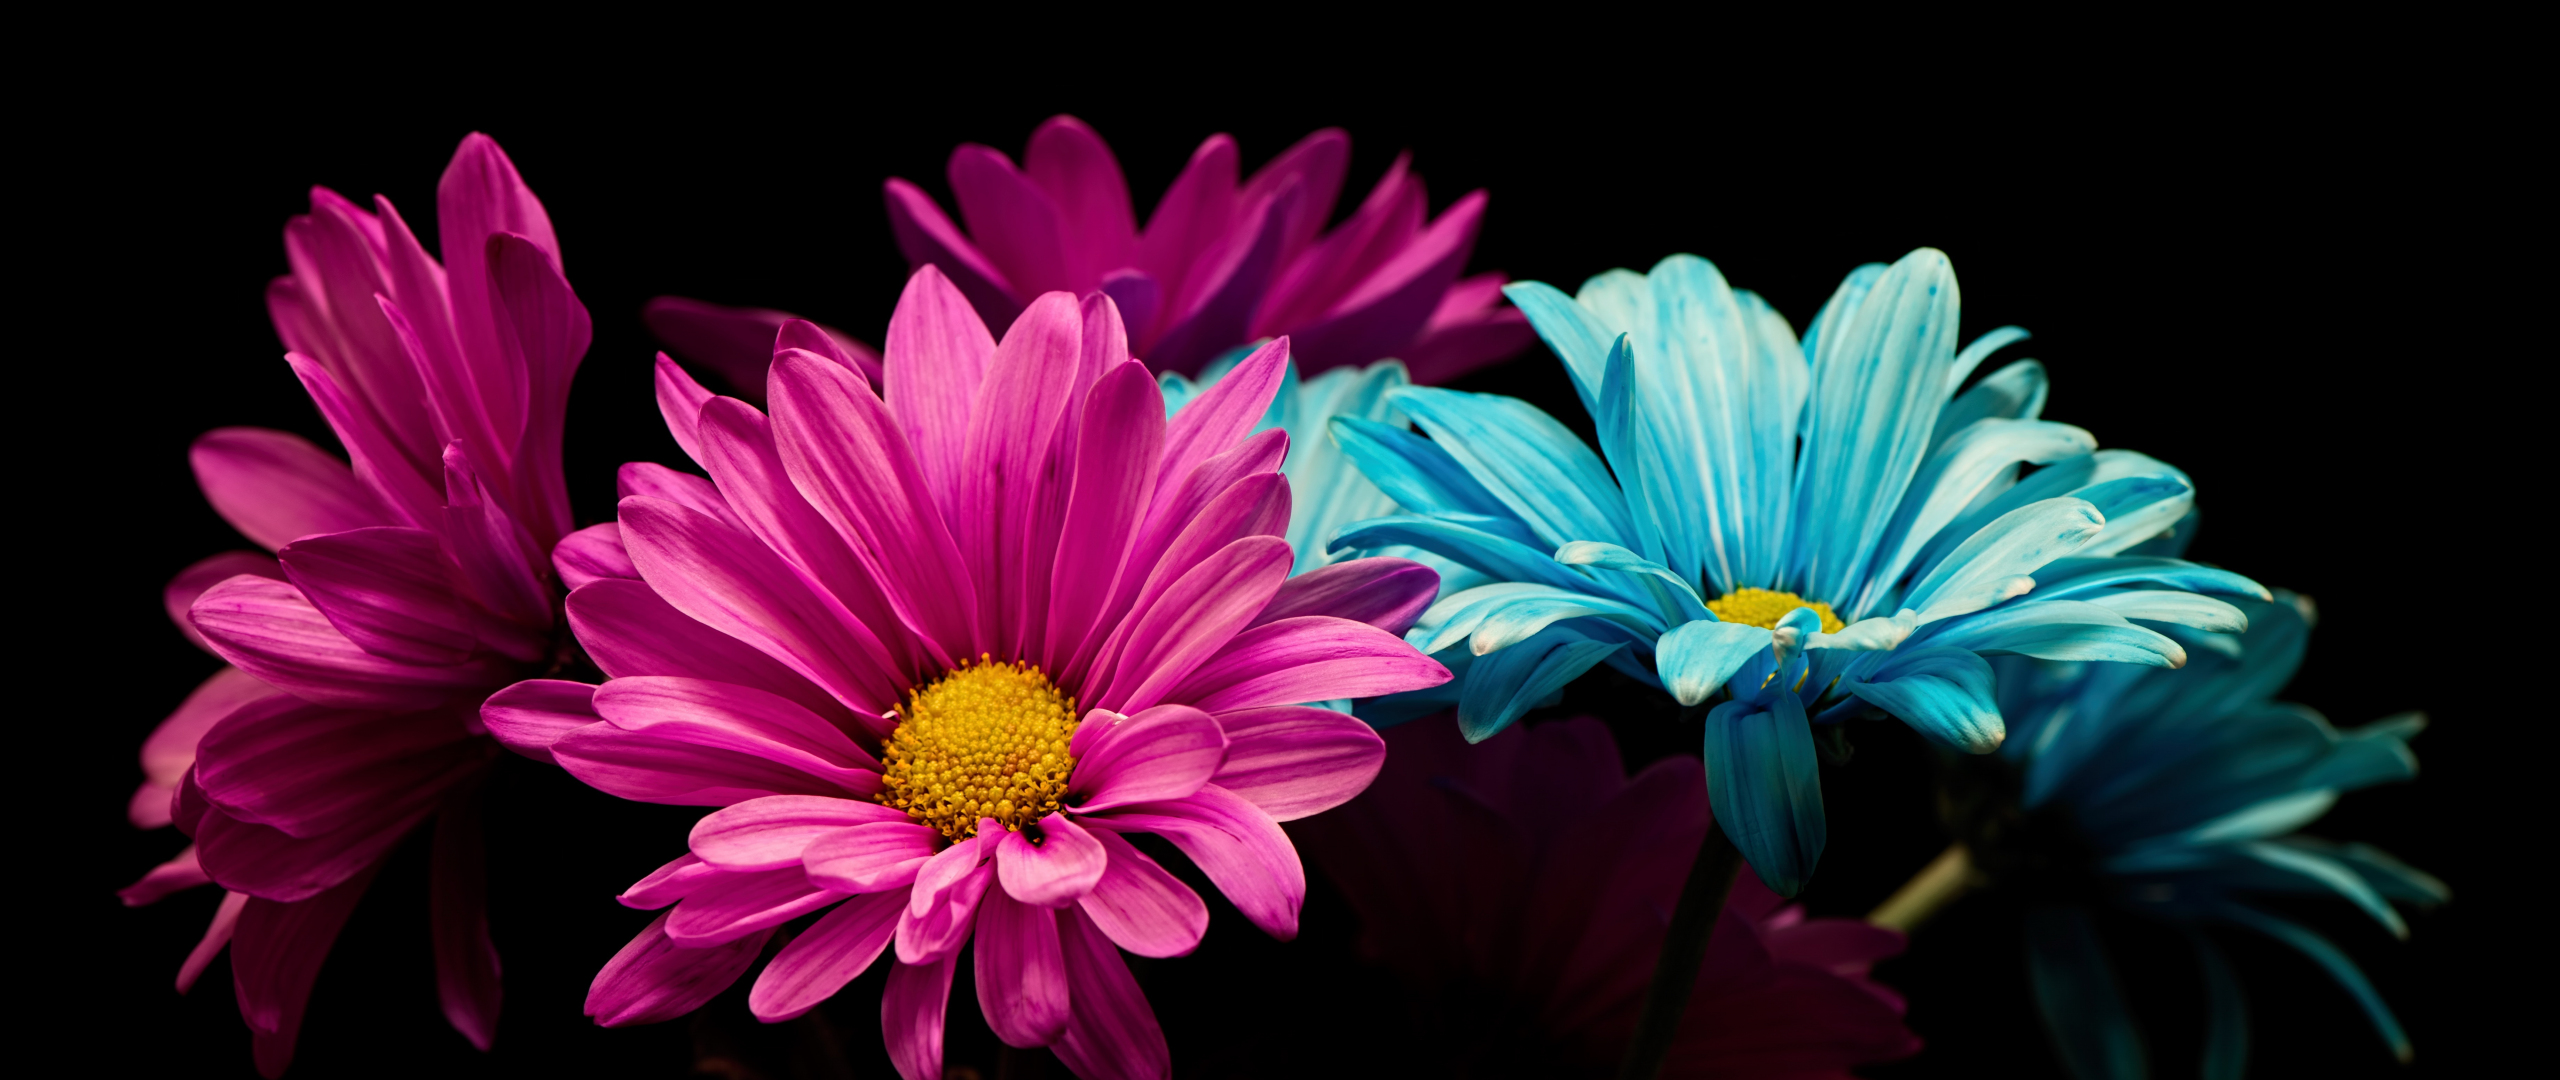 Download wallpaper 2560x1080 colorful, daisy, flowers, portrait, dual ...